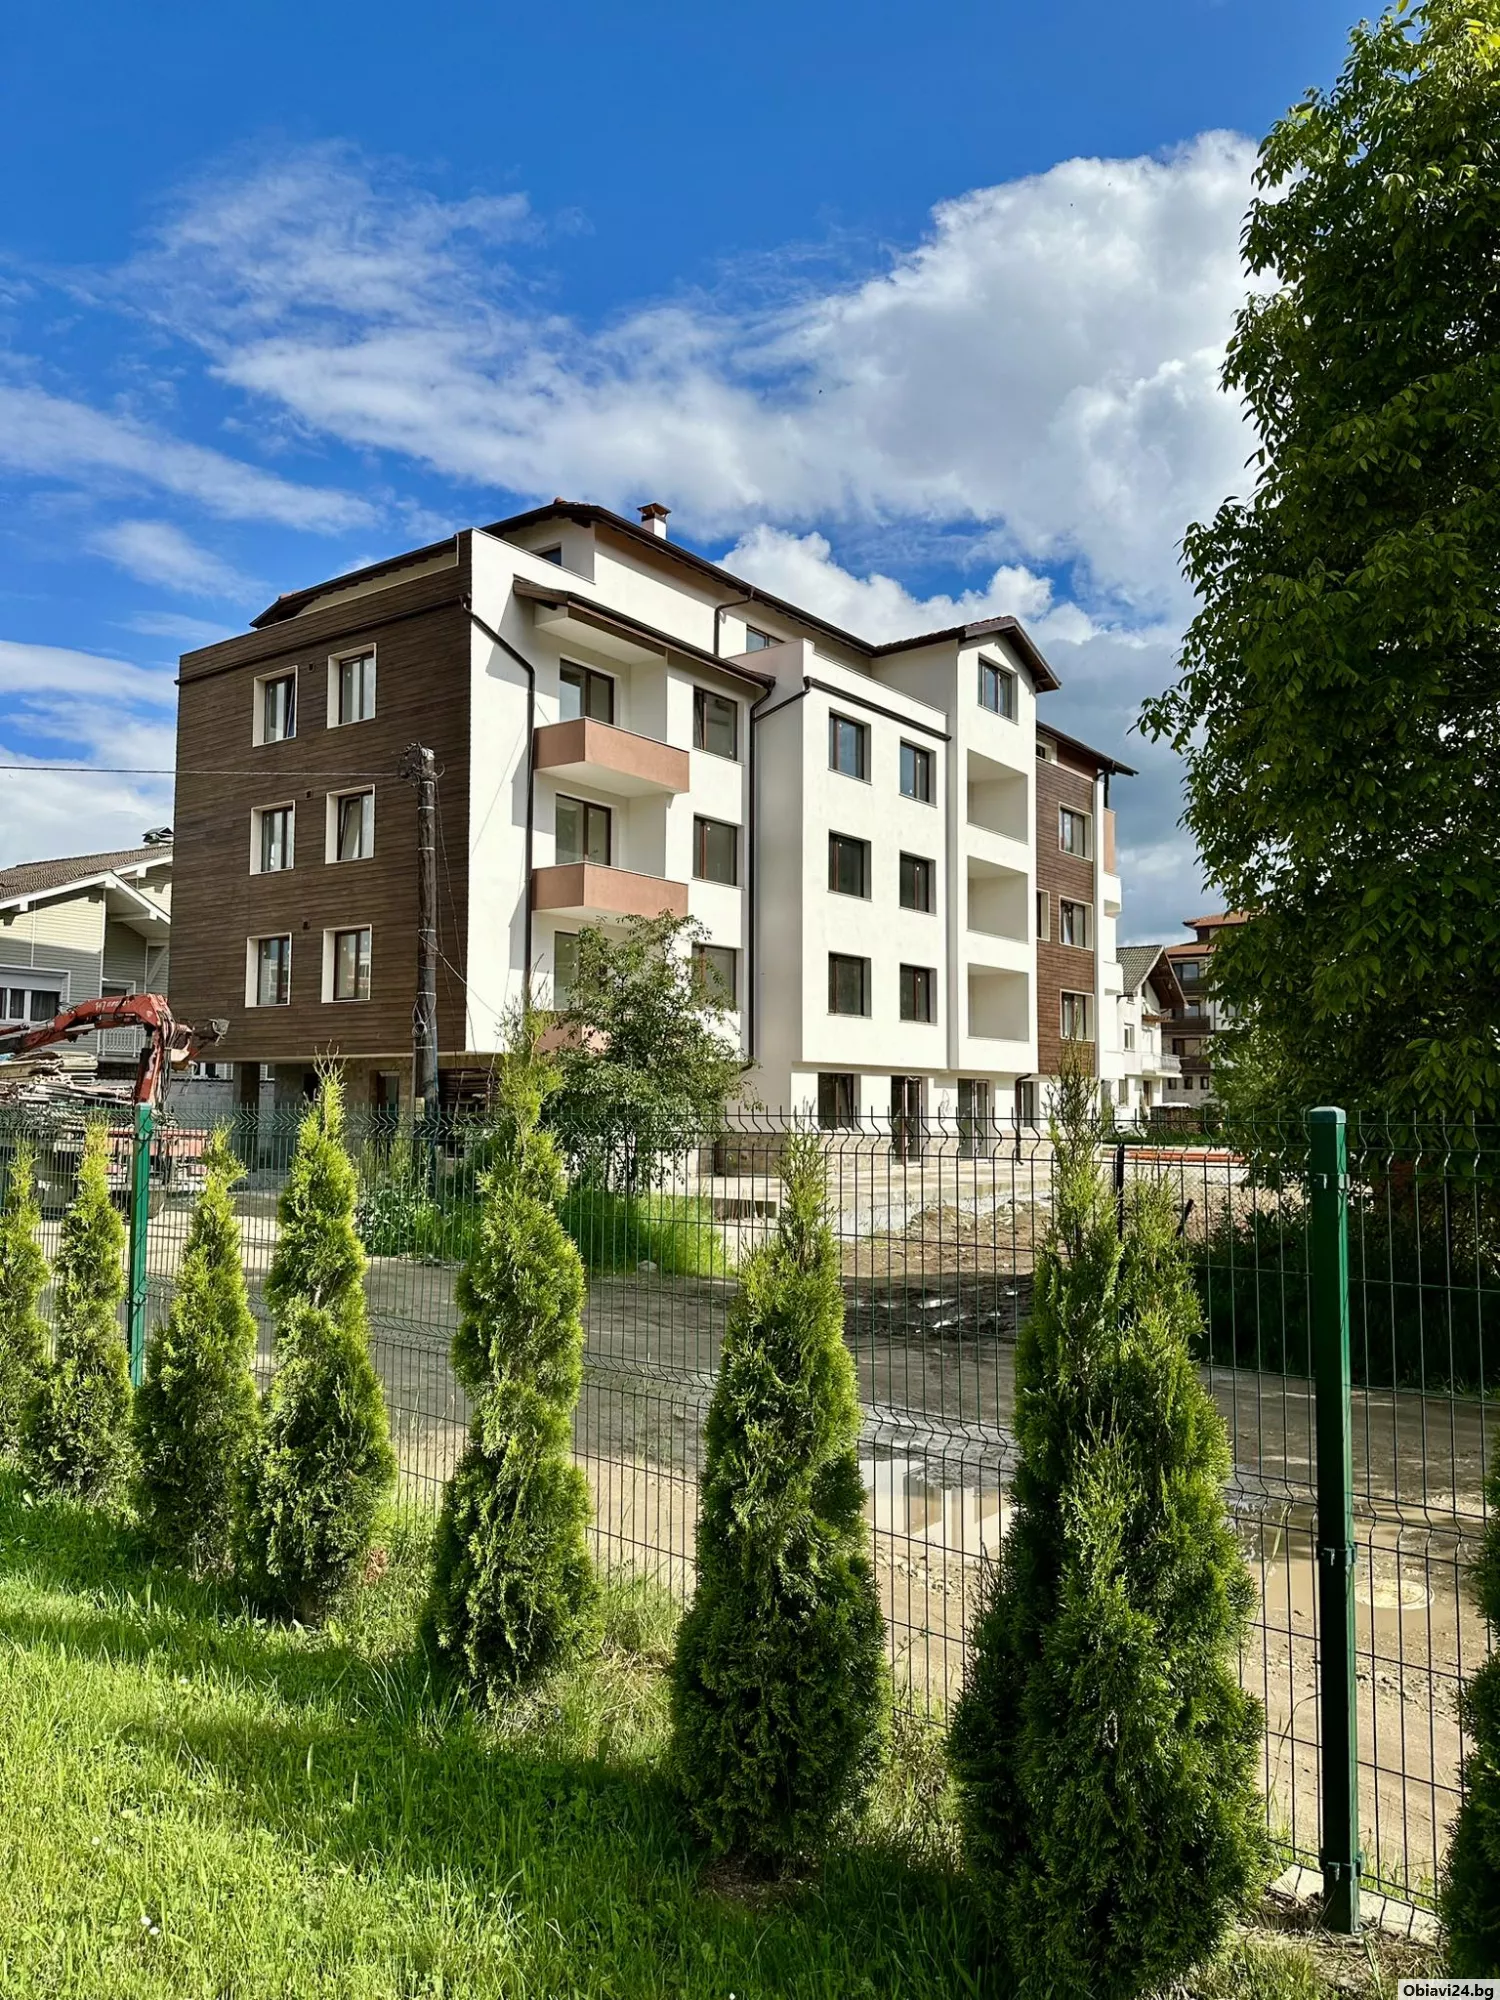 Апартаменти във Велинград - obiavi24.bg